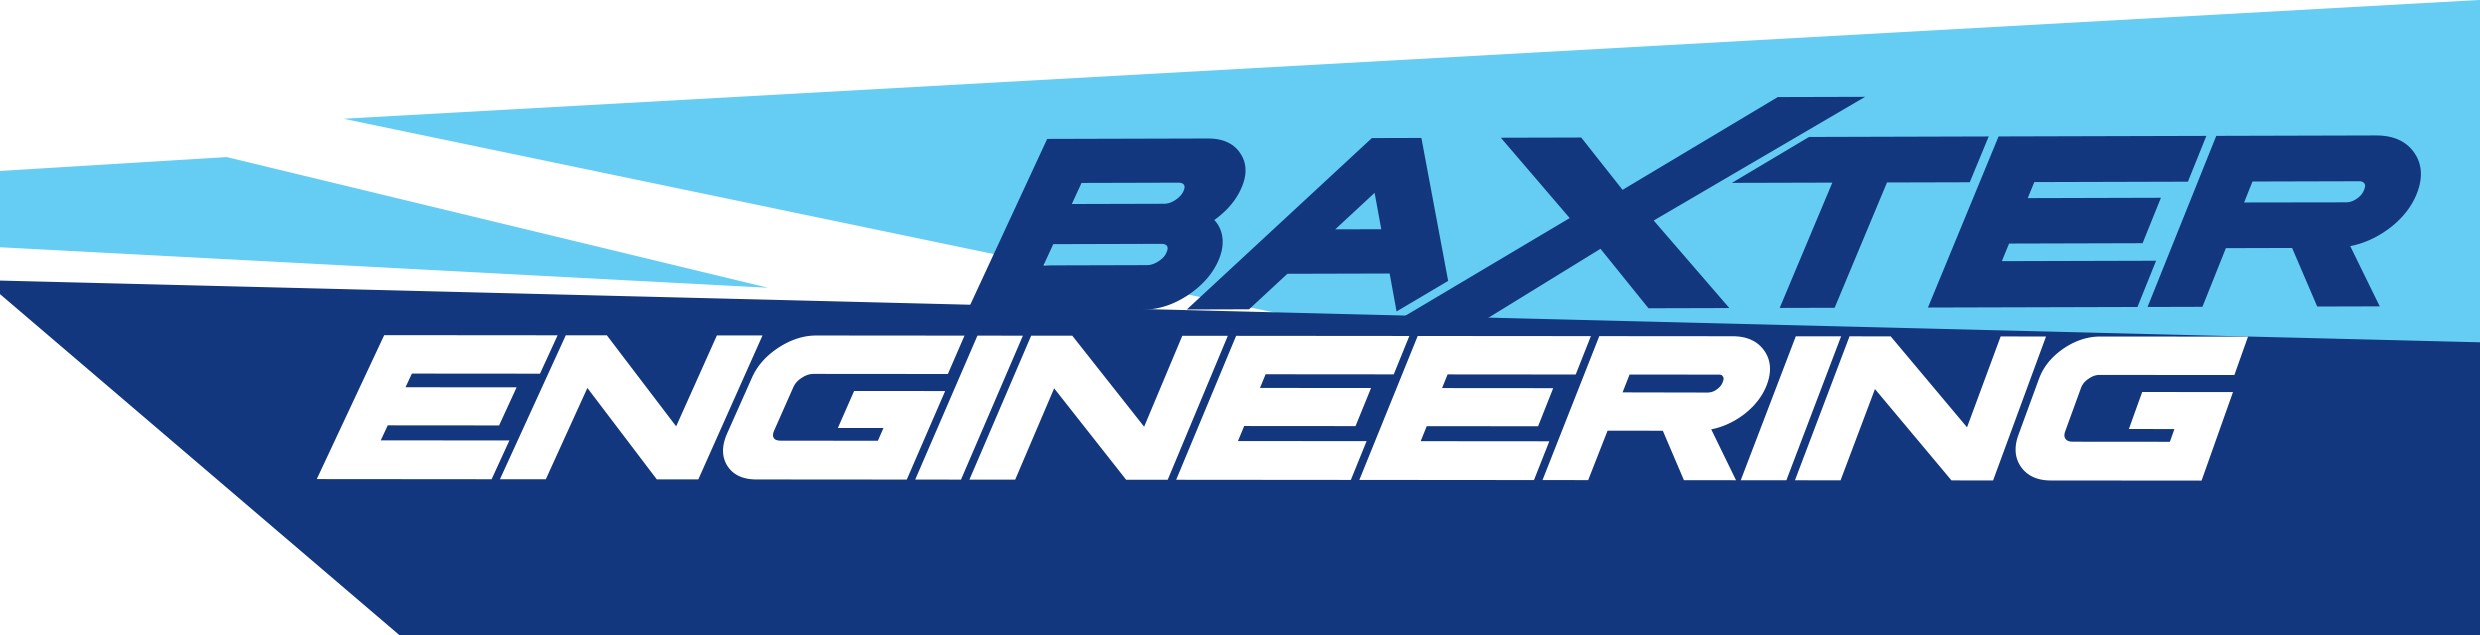 Baxter Engineering